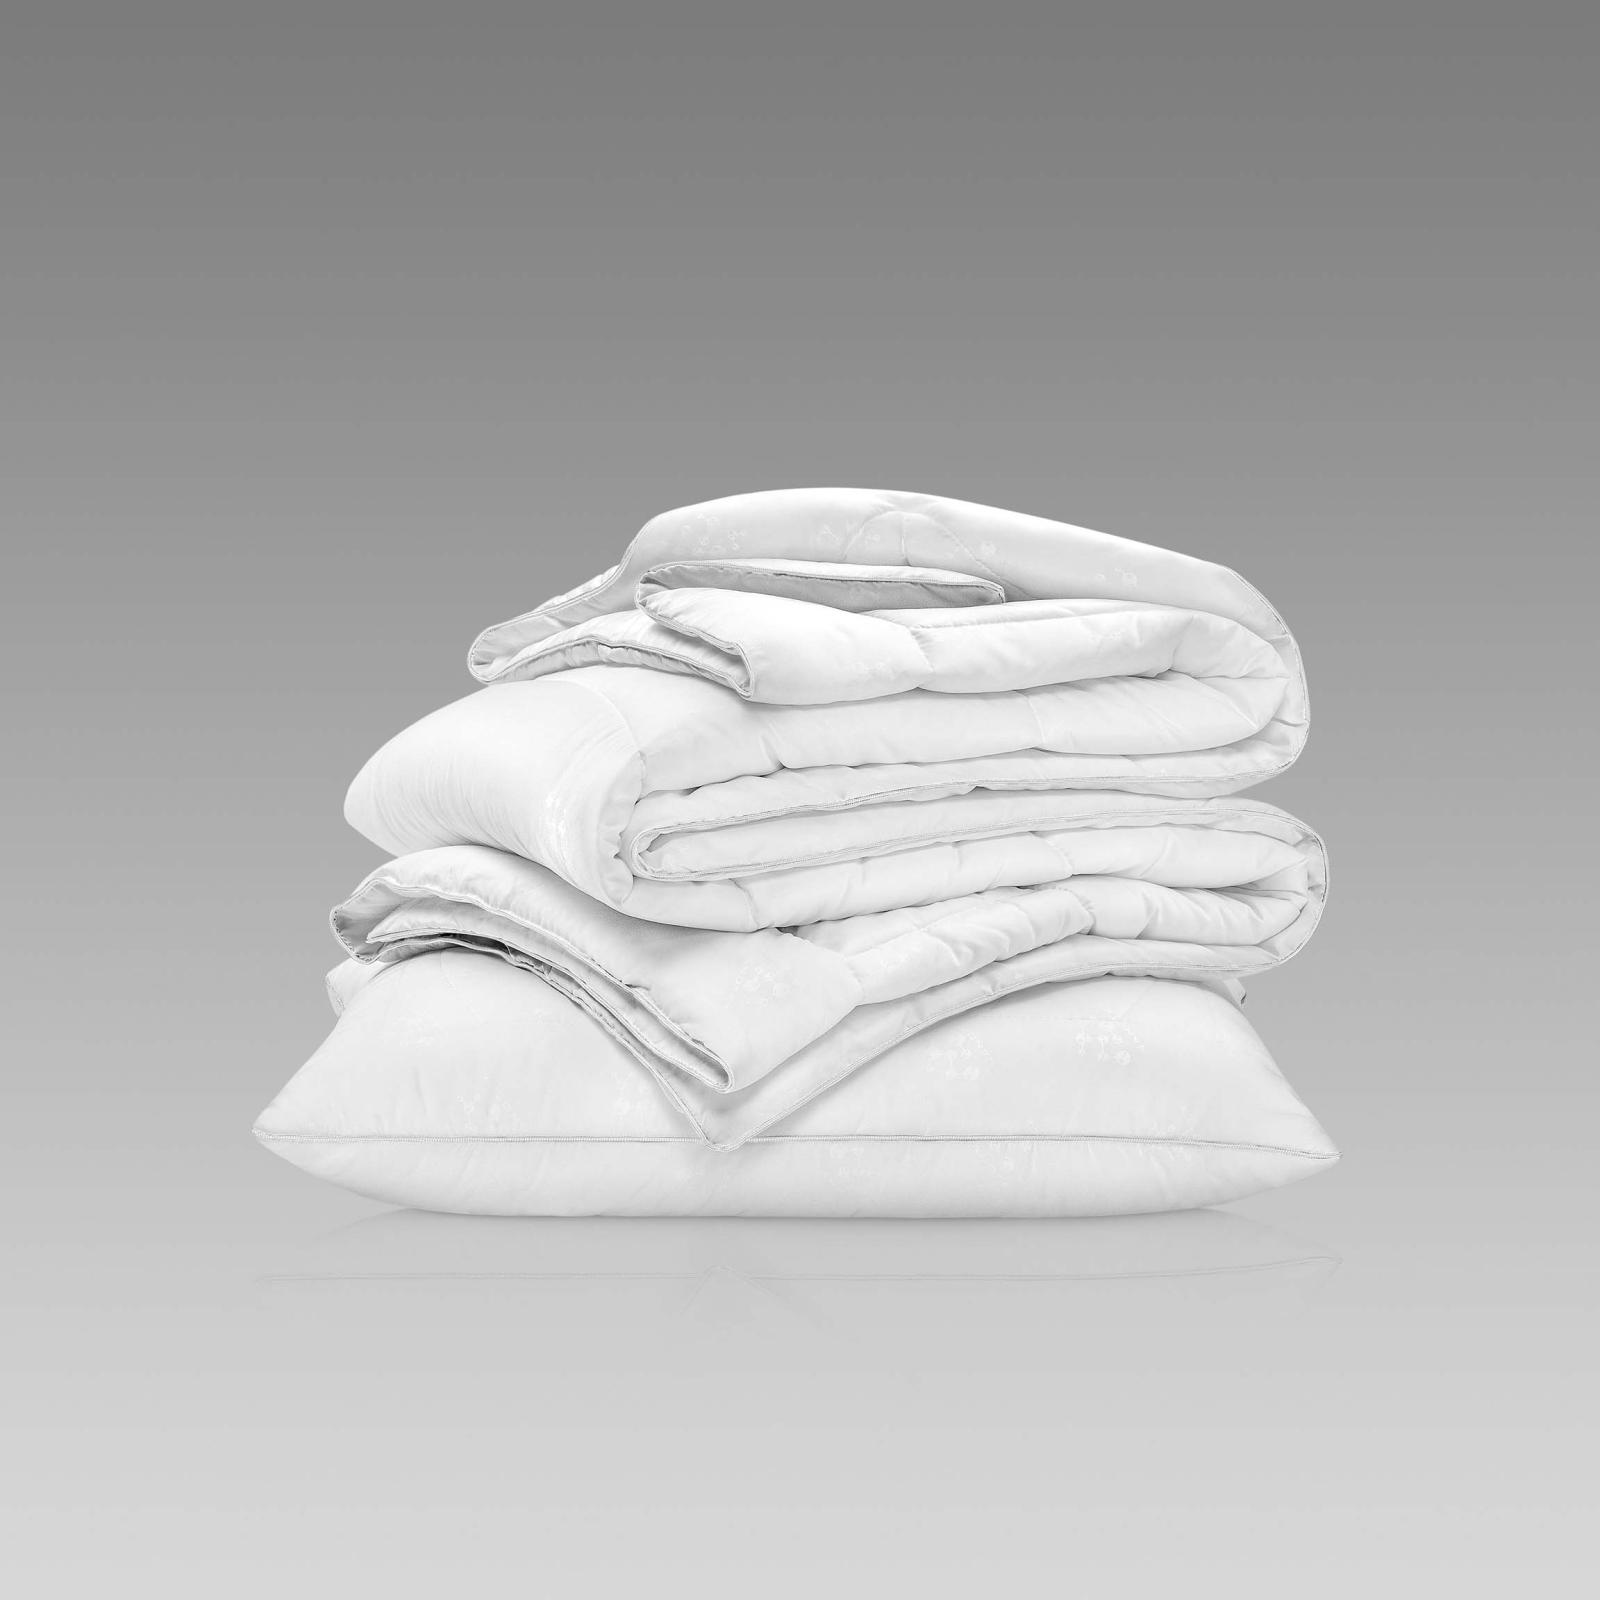 Одеяло Гелиос 220х240 см (20.04.12.0122), цвет белый, размер 220х240 см - фото 5